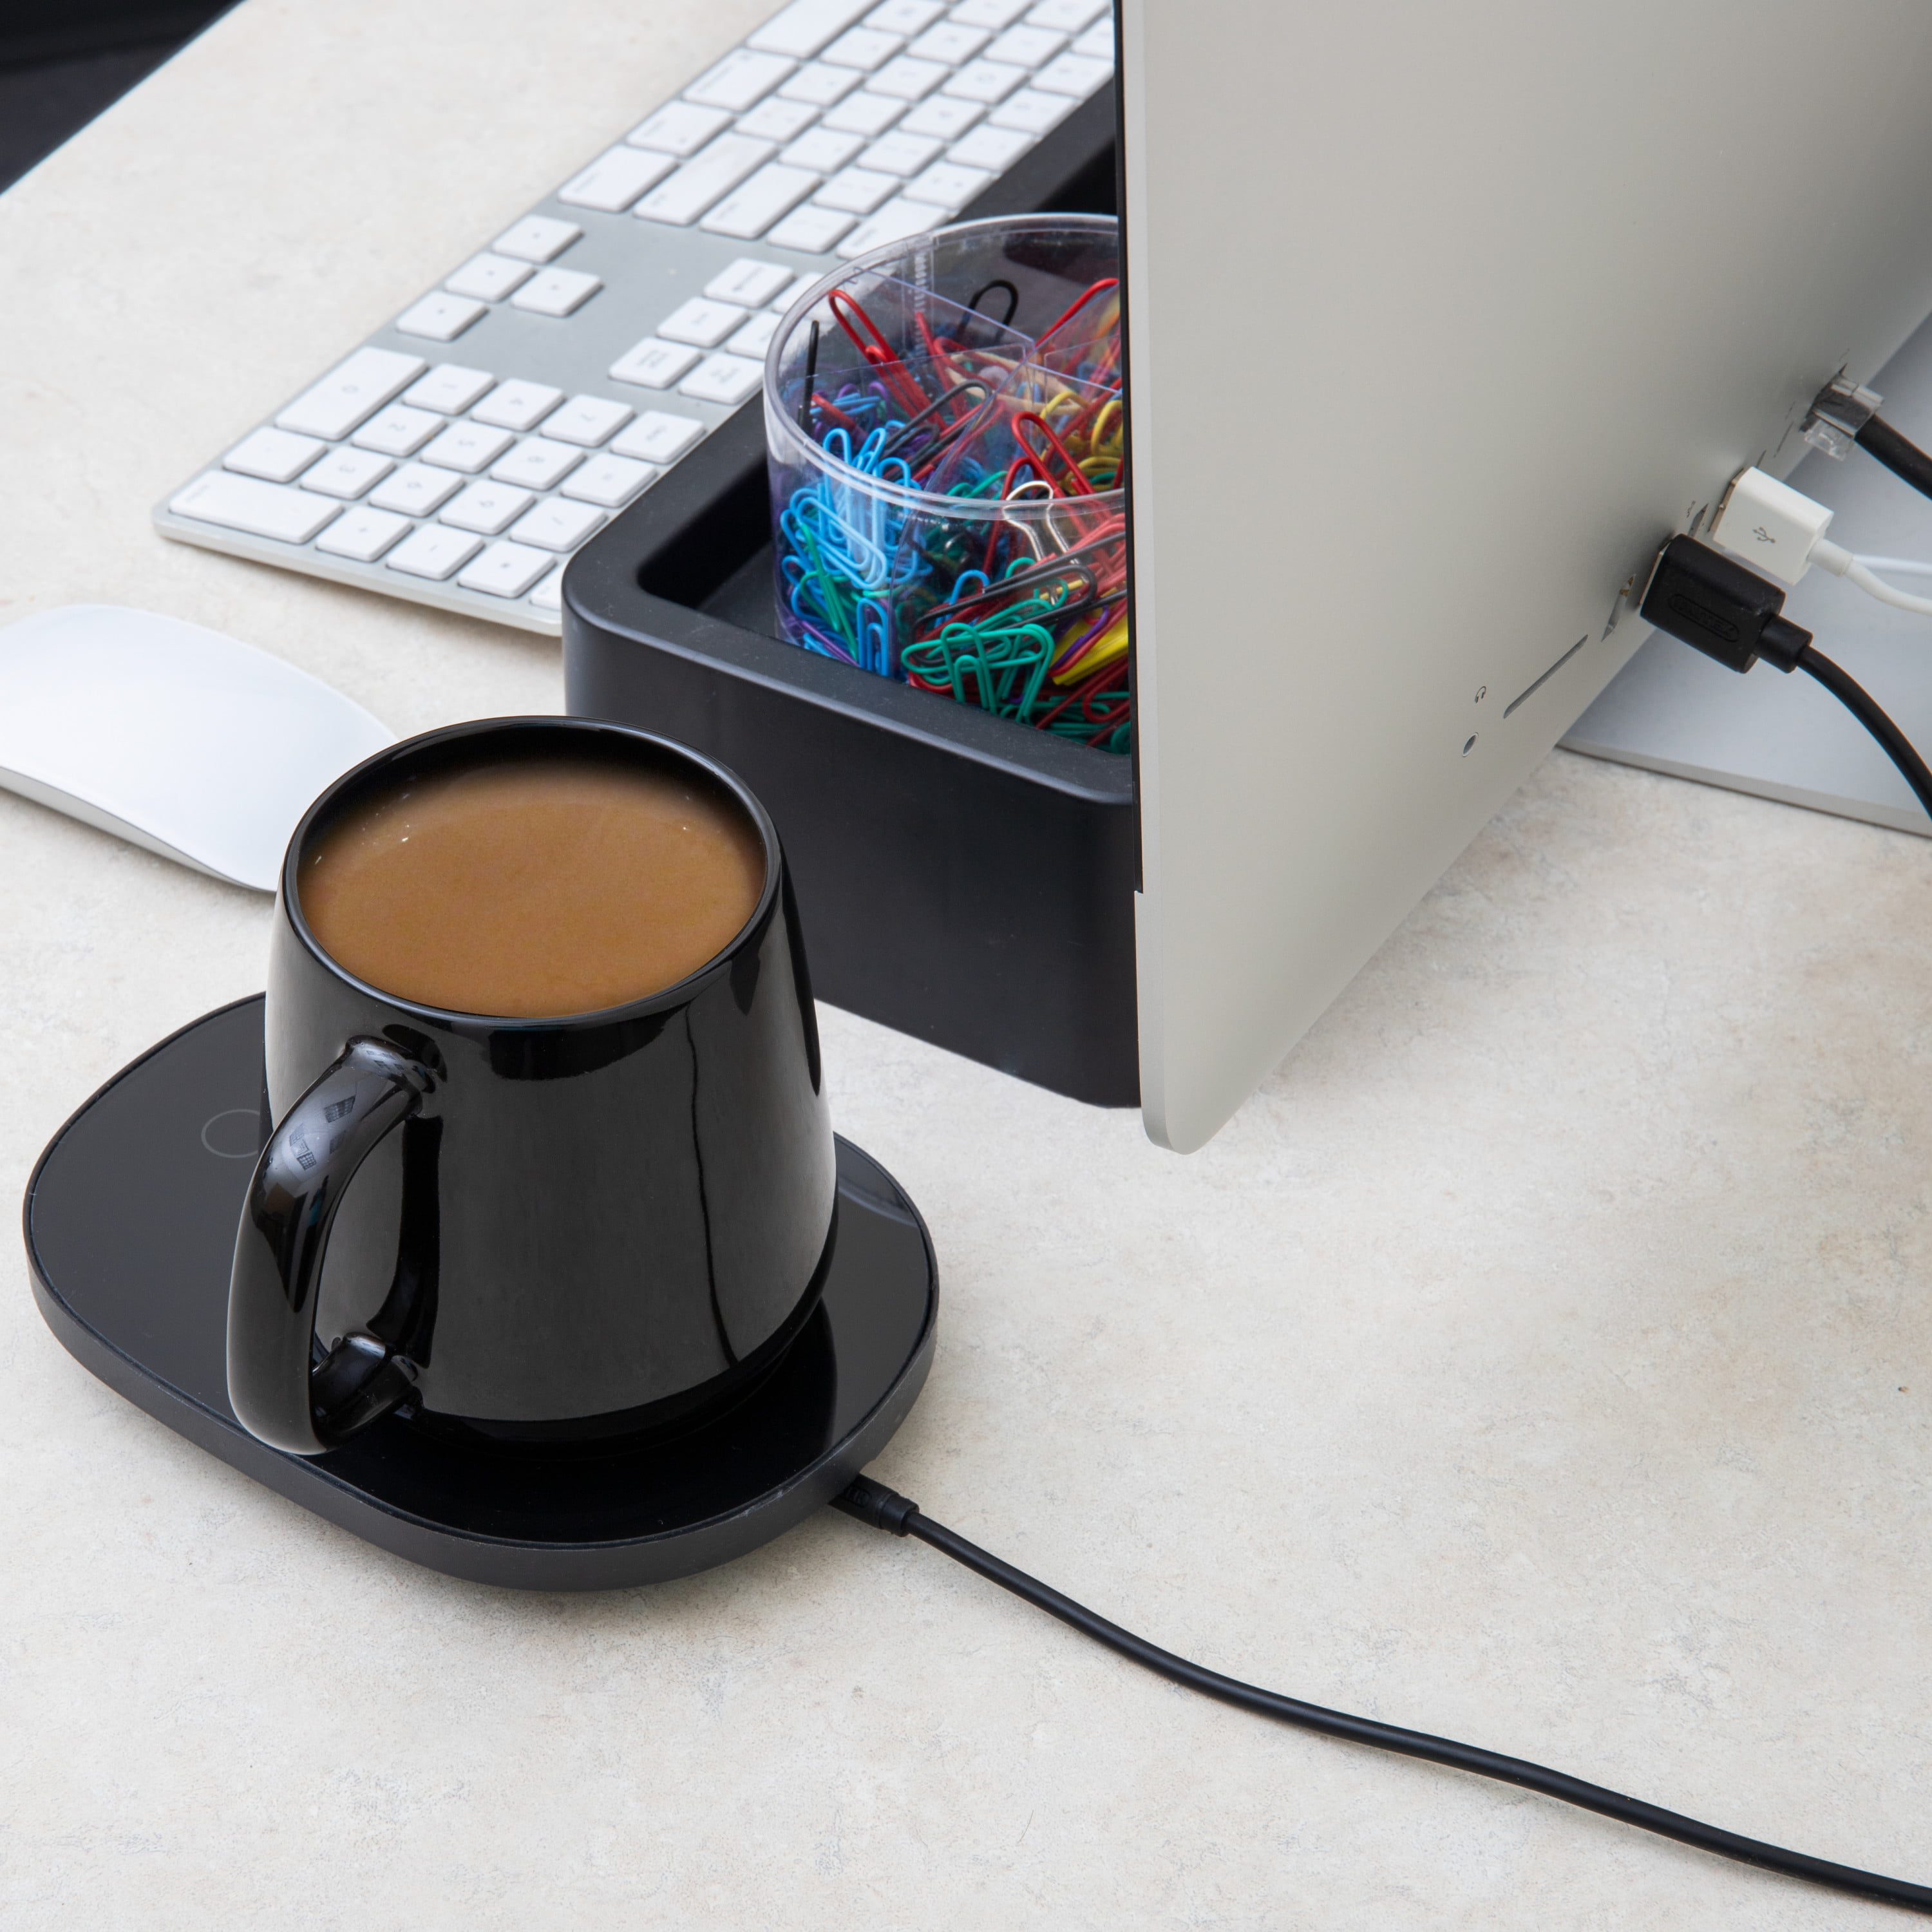 Toorise Cup Warmer USB Coffee Mug Heating Pad 5W Compact Portable Mug  Heater Milk Tea Electric Fast Heating Cup Mat Constant for Home Office Dorm  Desk